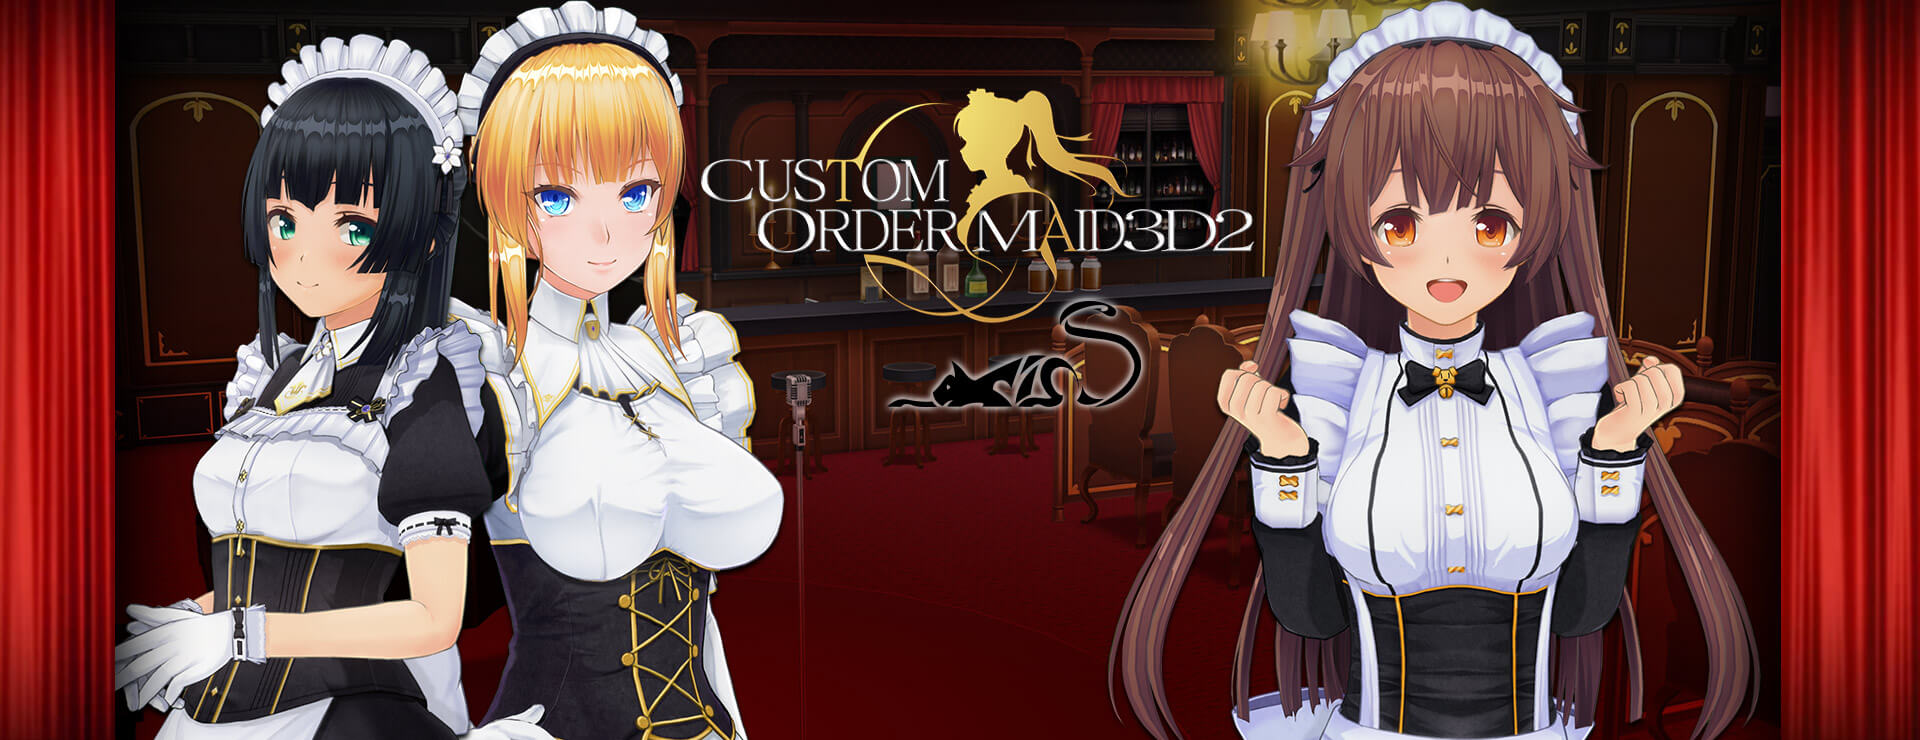 Custom Order Maid 3D2 Enjoy Empire Life GP-01 Bundle - Symulacja Gra